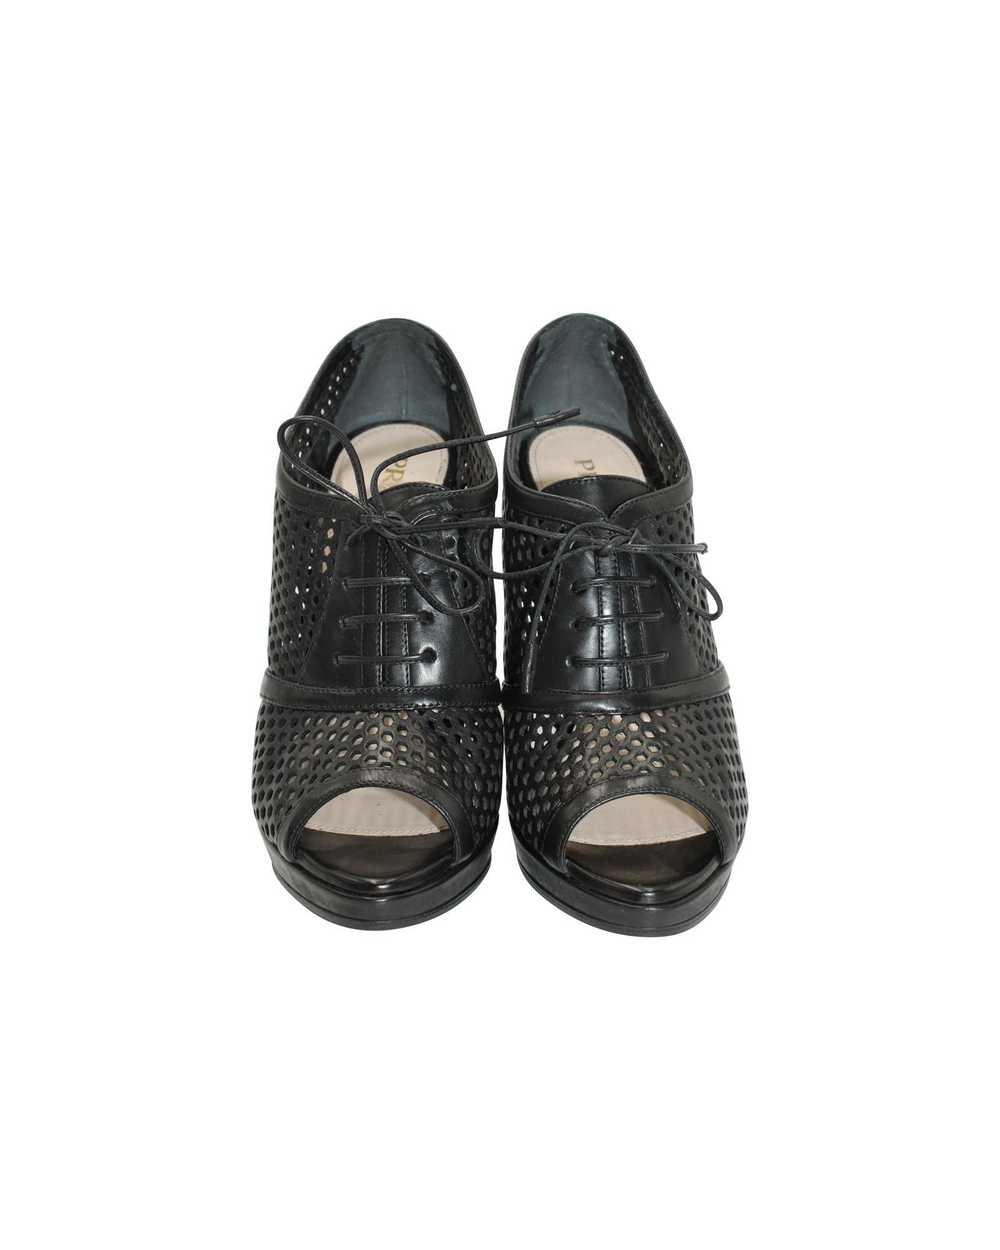 Prada Perforated Black Leather Platform Sandals - image 4